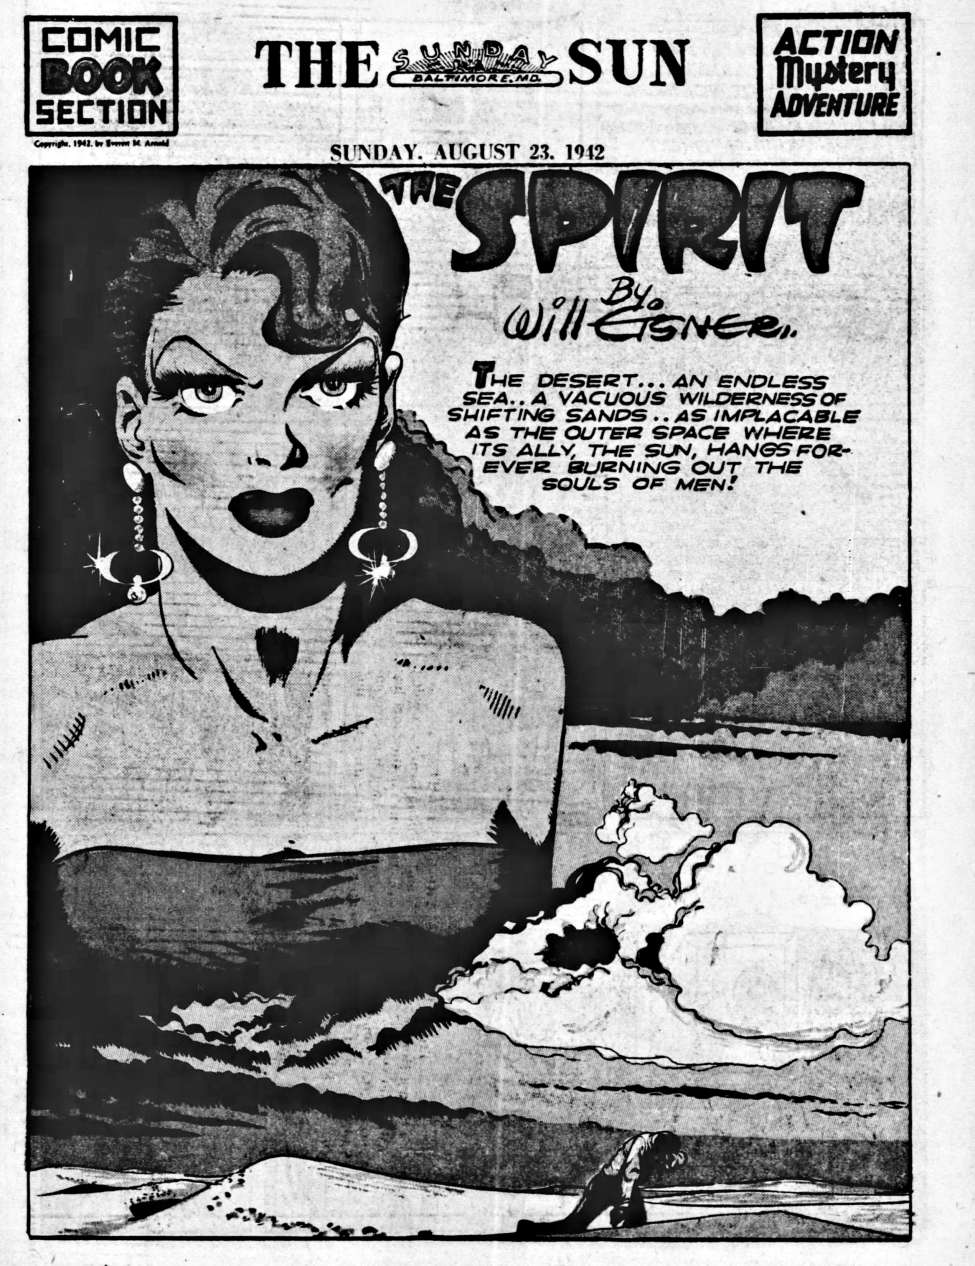 Comic Book Cover For The Spirit (1942-08-23) - Baltimore Sun (b/w)